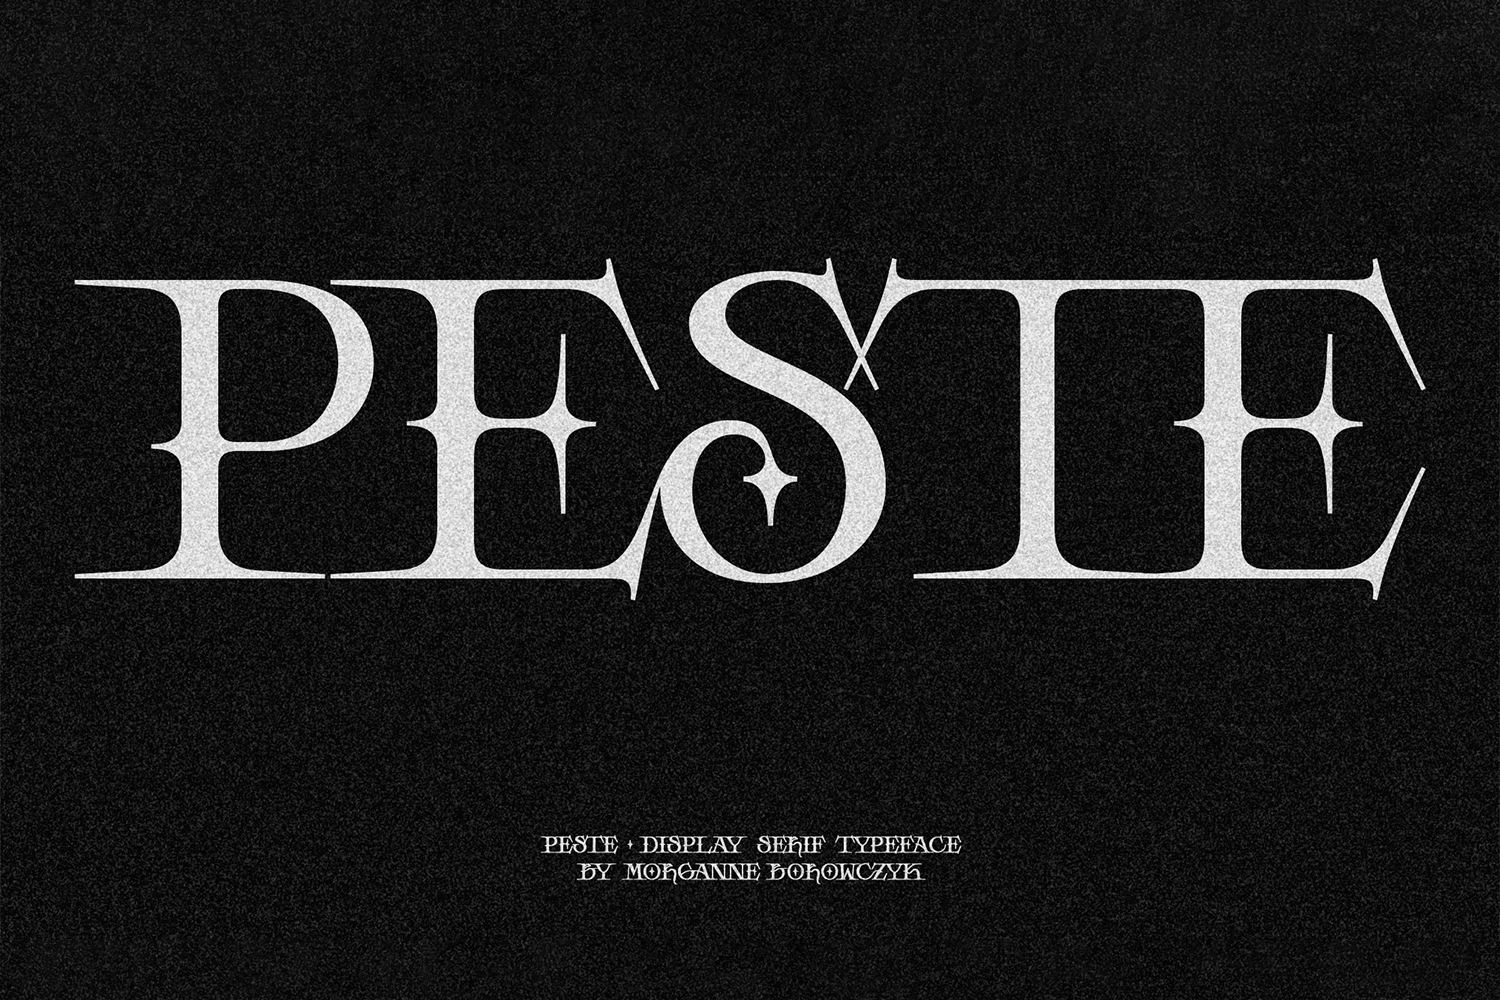 4559 复古优雅酸性连体英文衬线字体 Peste — Display Serif Font@GOOODME.COM.002